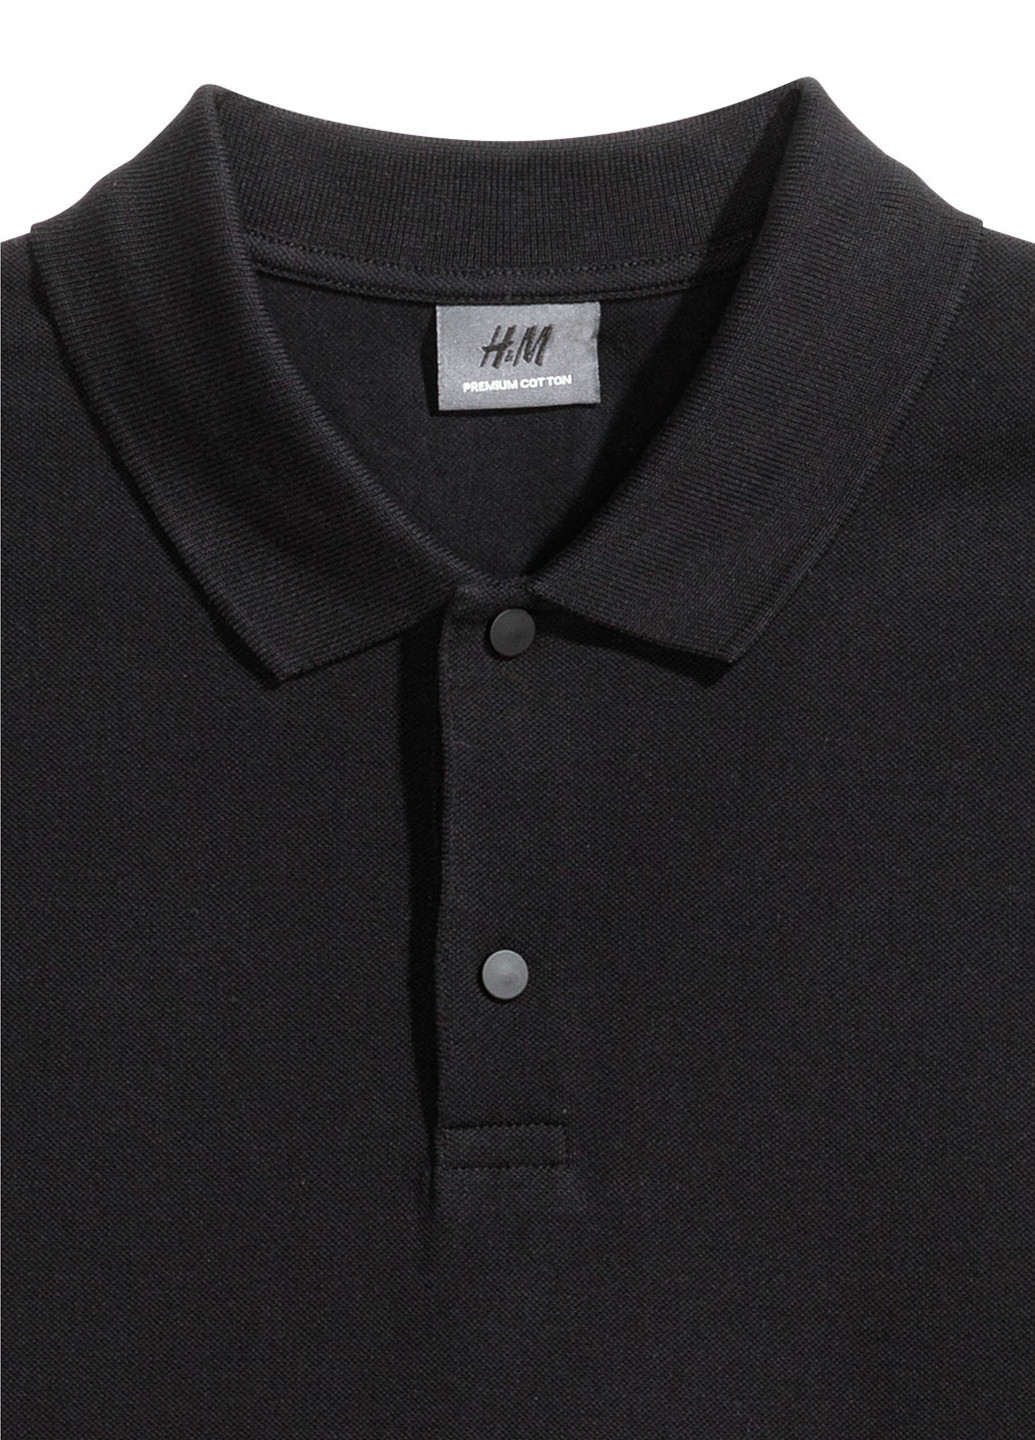 Черная футболка-поло для мужчин H&M однотонная